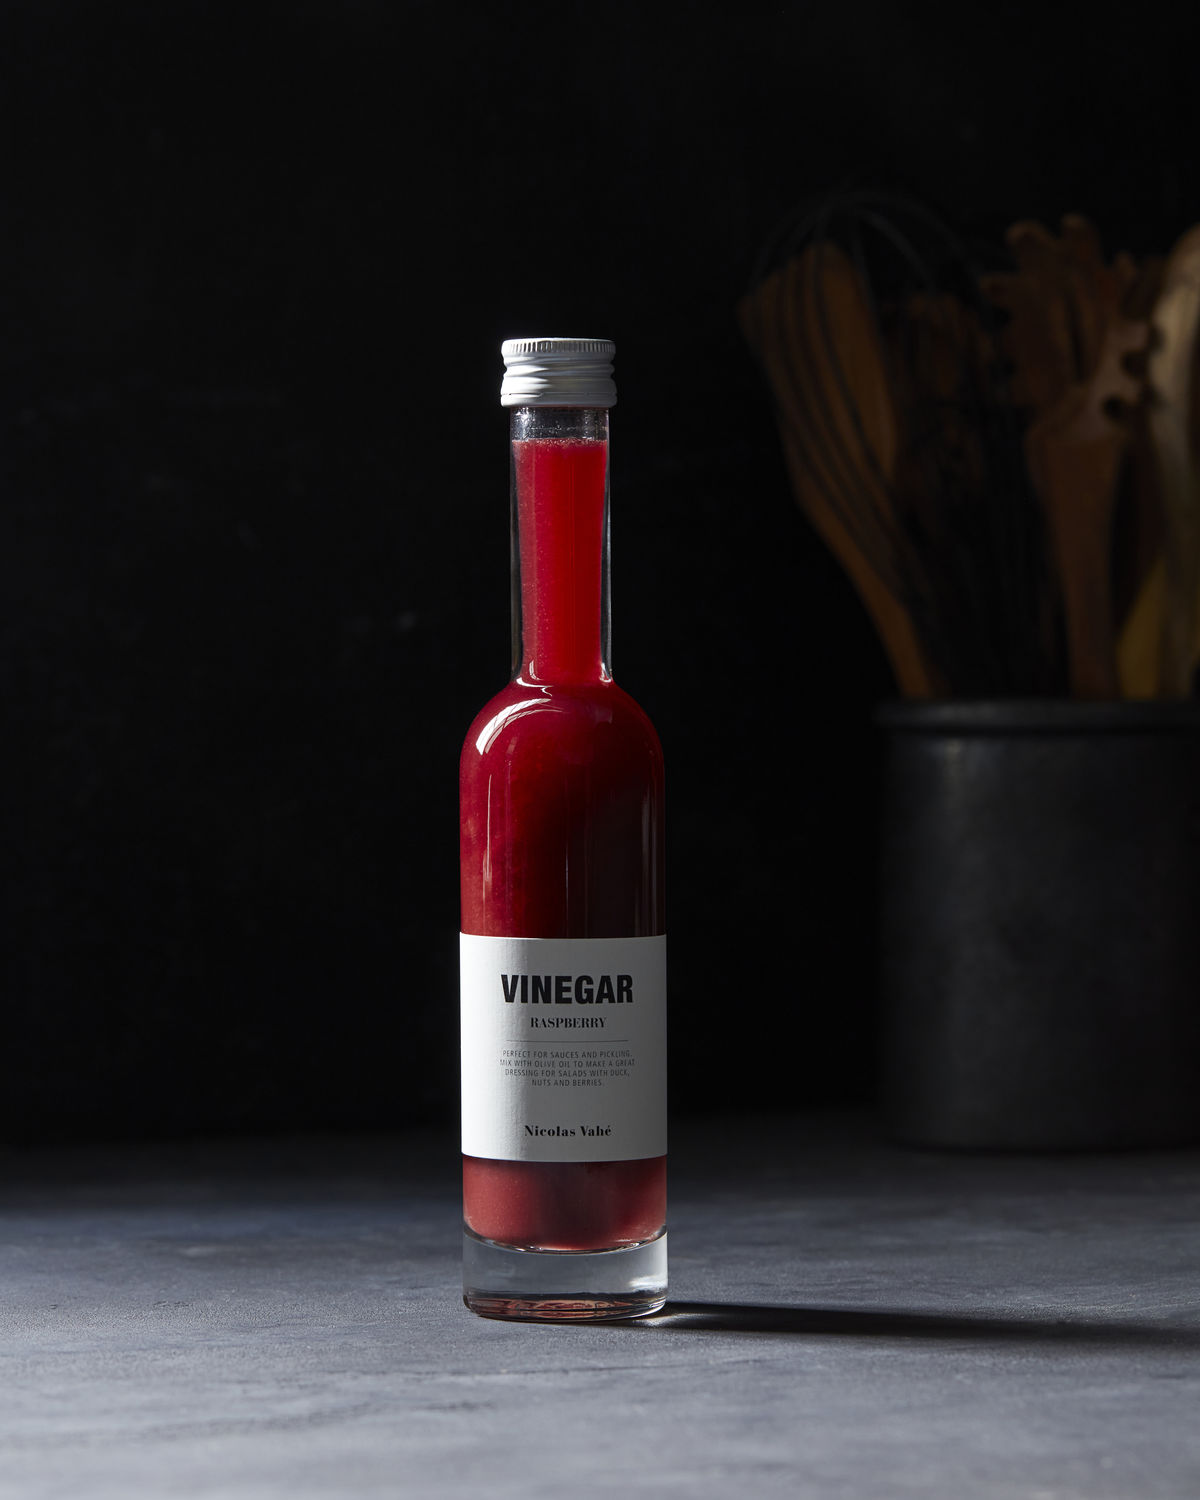 Vinegar, Raspberry, 200 ml.